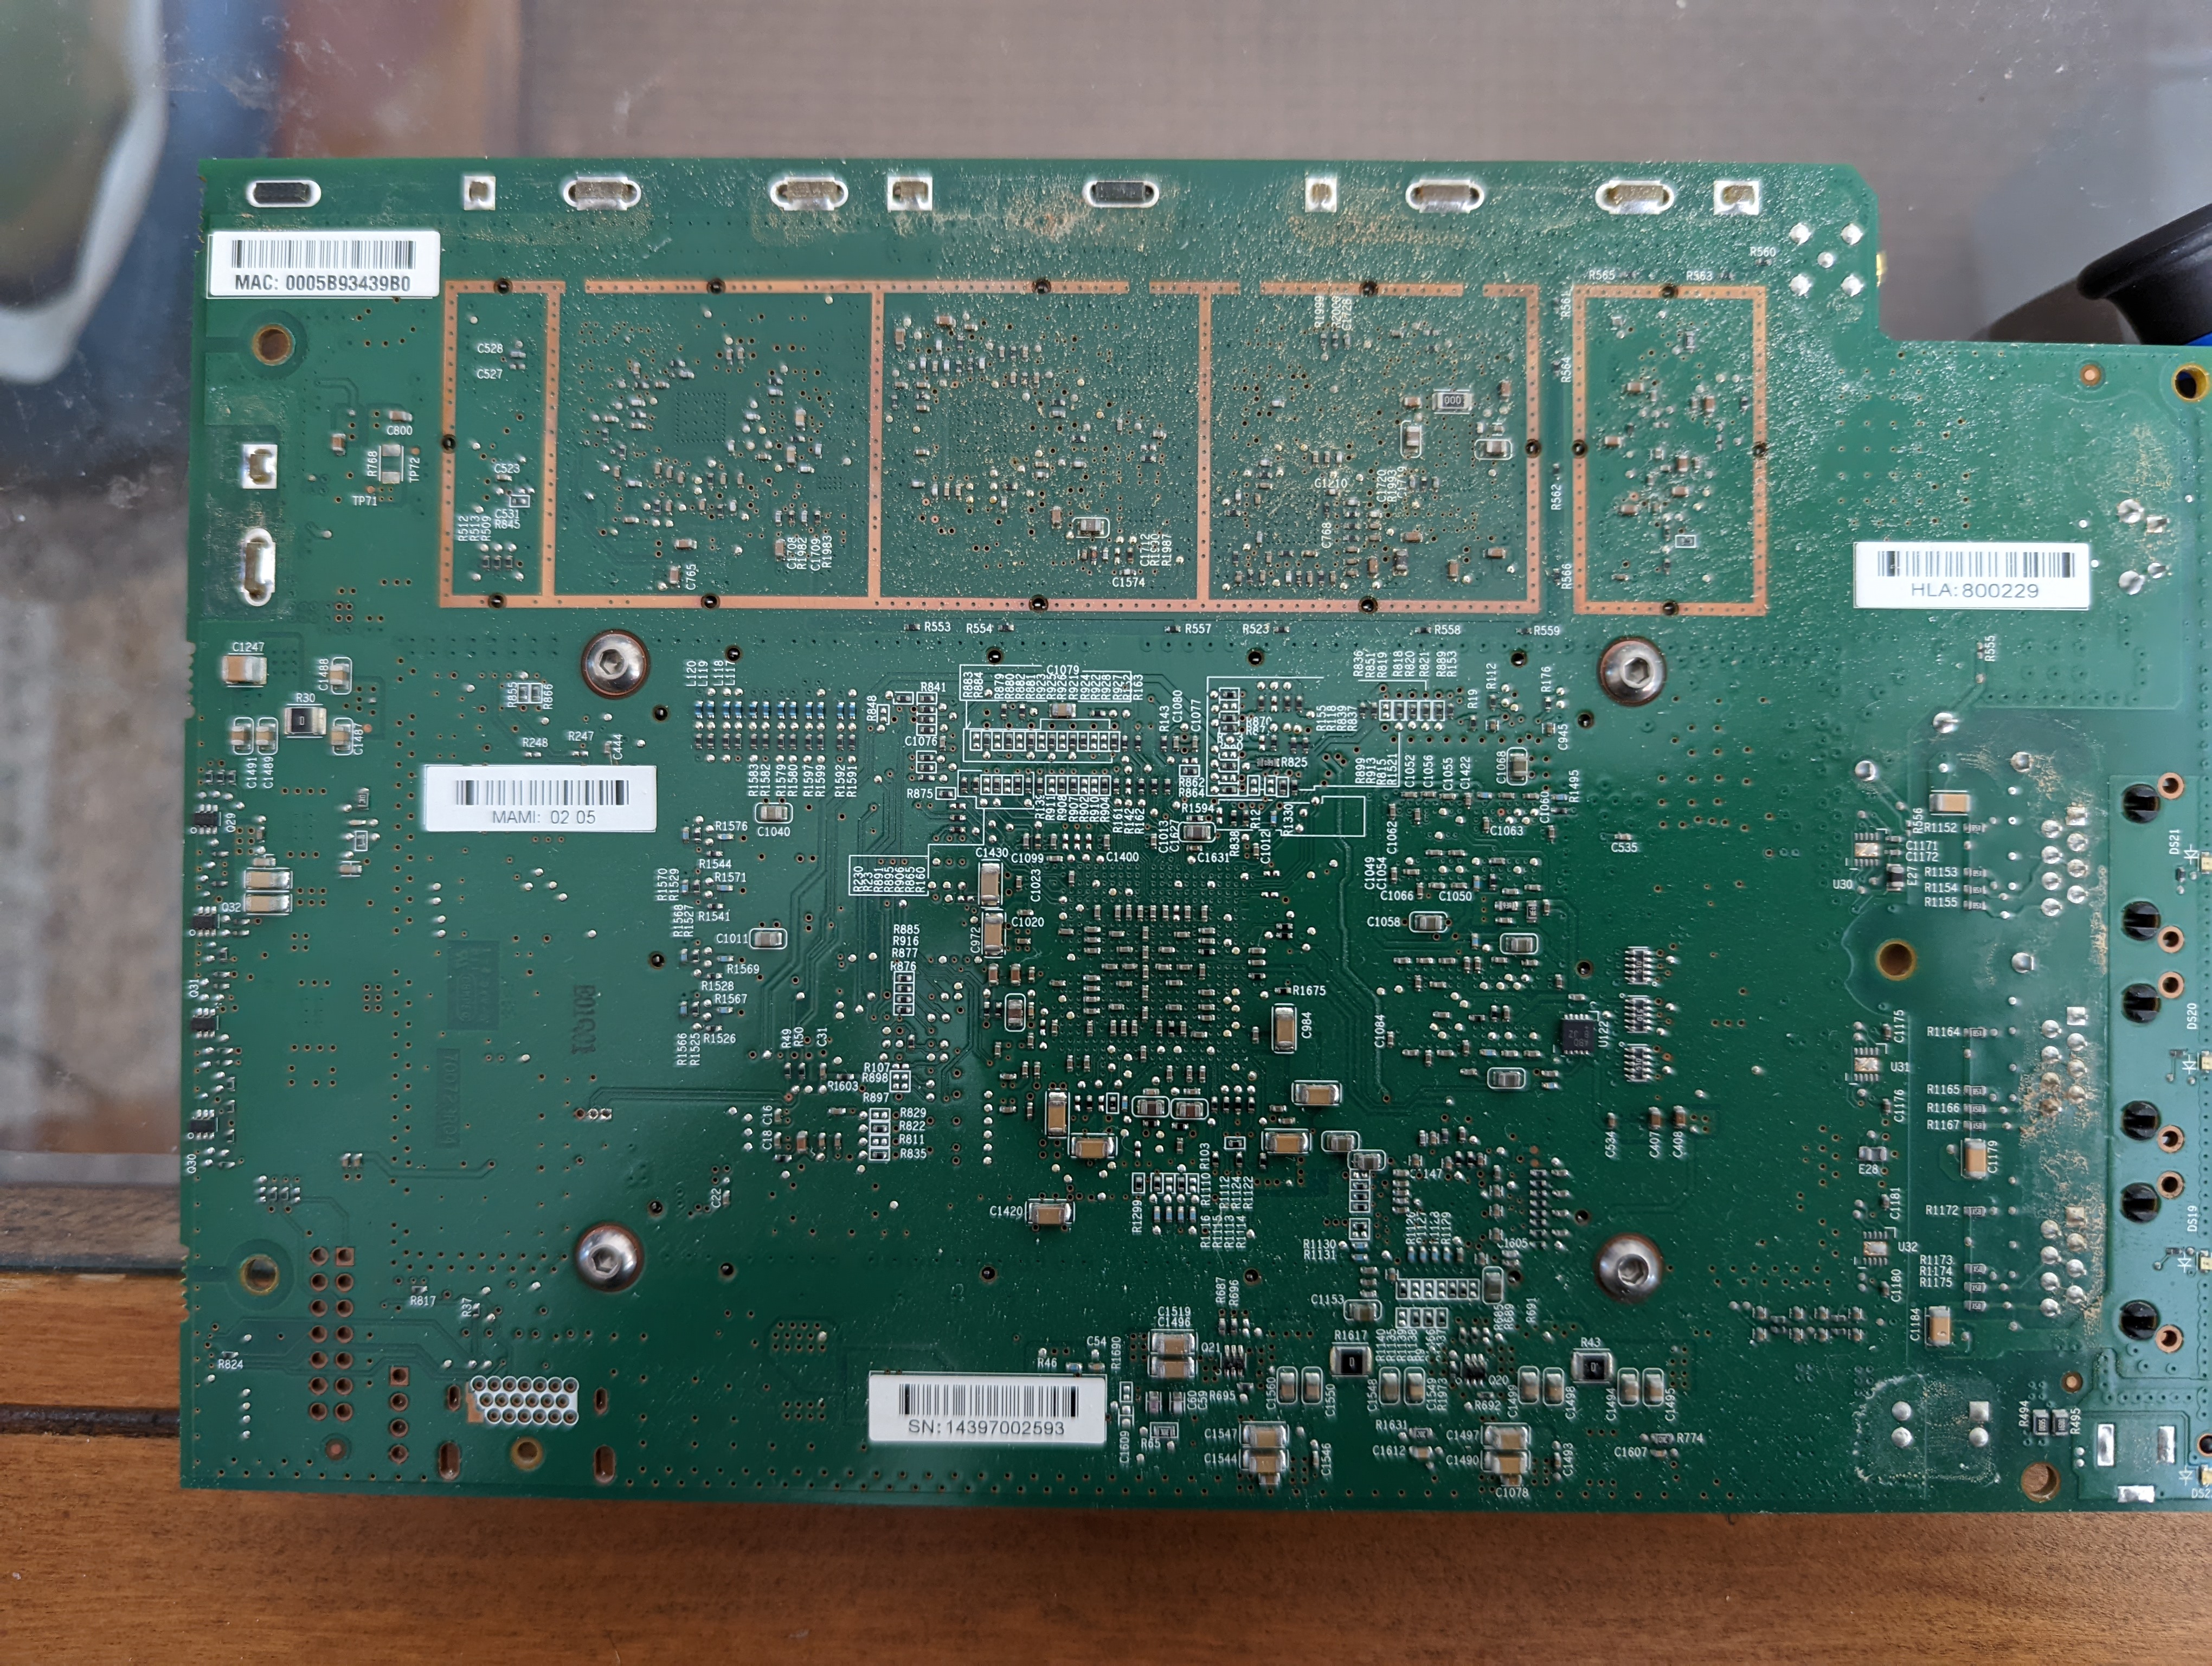 Back of circuit board